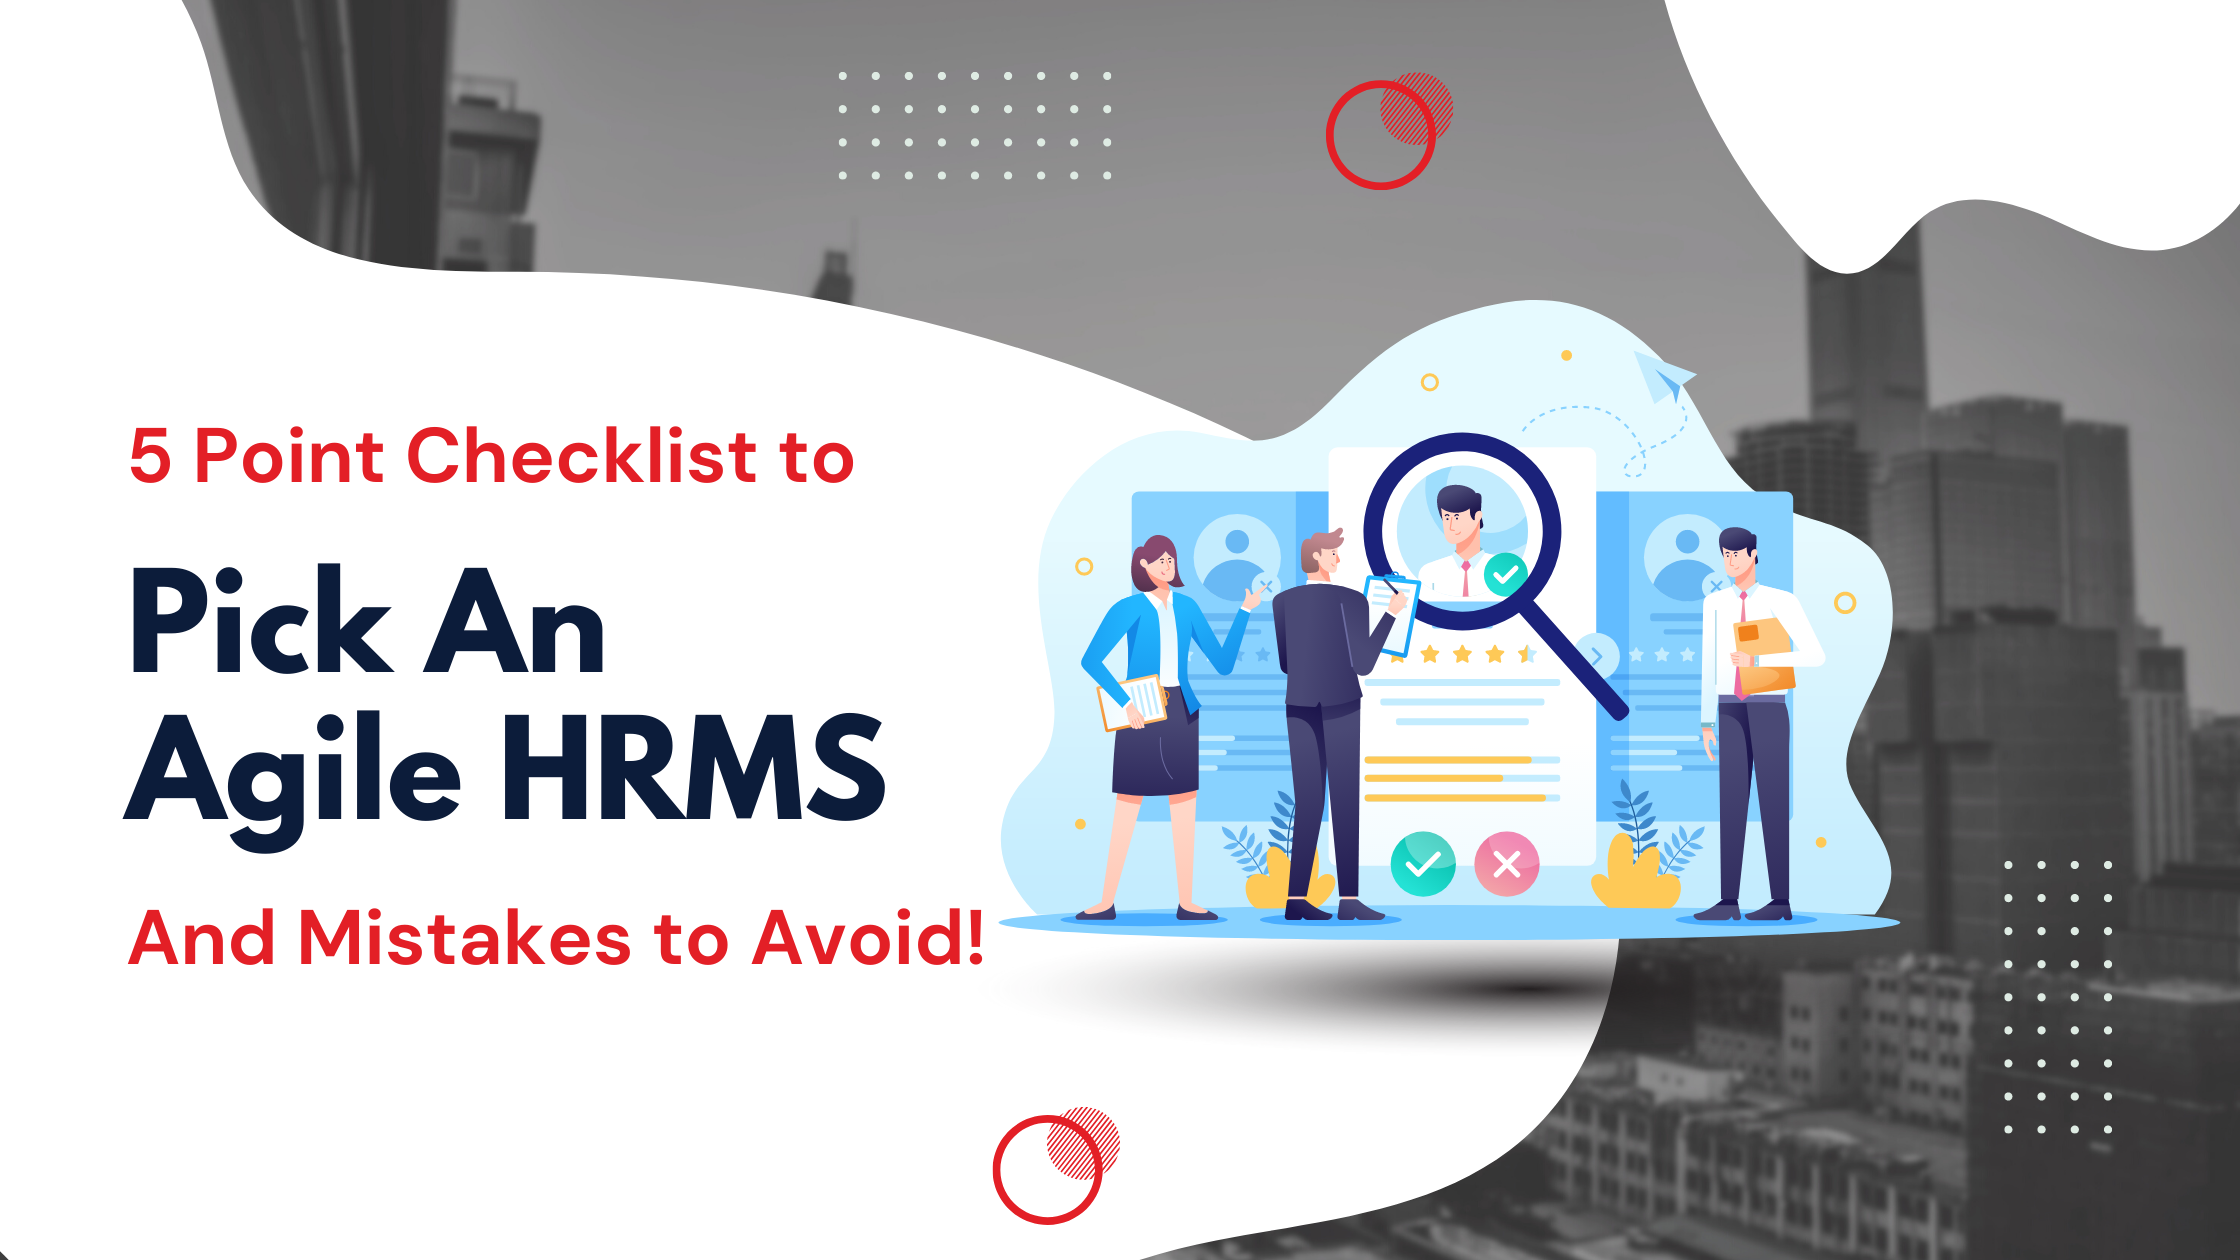 Pick An Agile HRMS